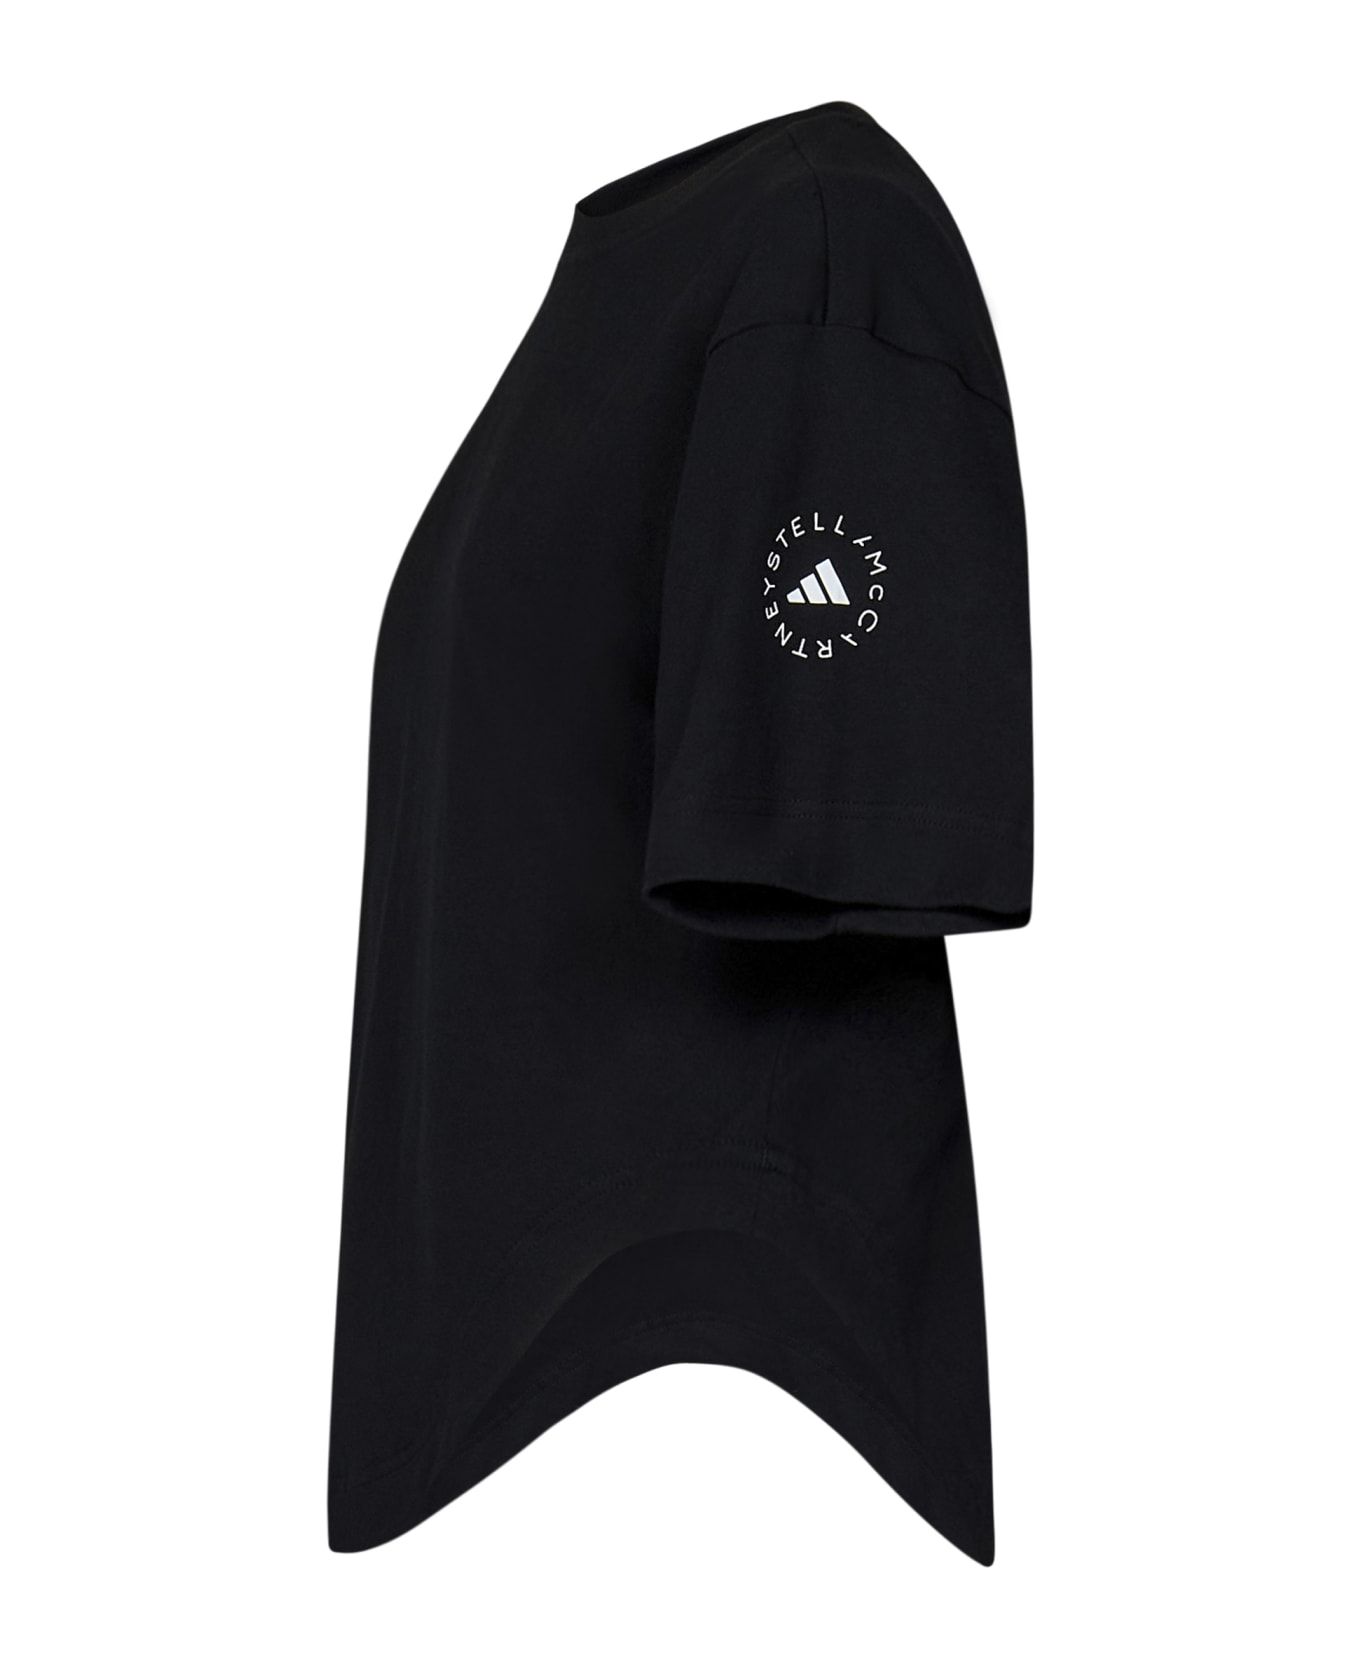 Adidas by Stella McCartney T-shirt - Black Tシャツ